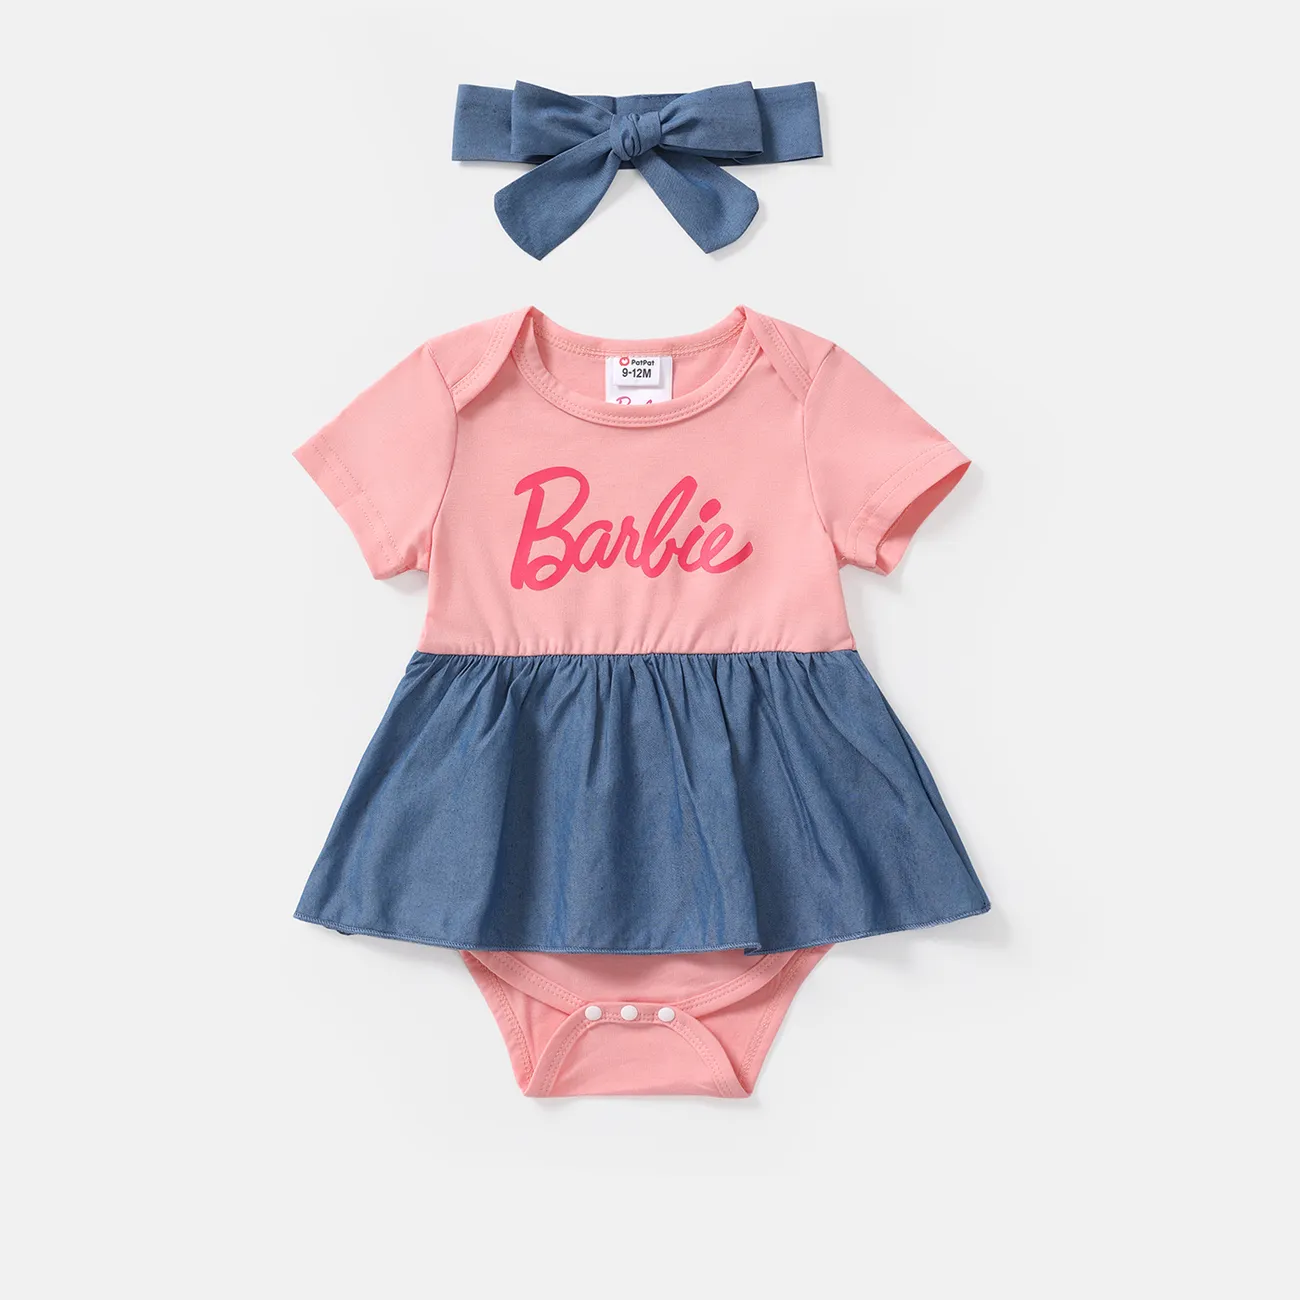 Barbie Mommy and Me Short-sleeve Letter Print Tee and Imitation Denim Skirt Sets Pink big image 1